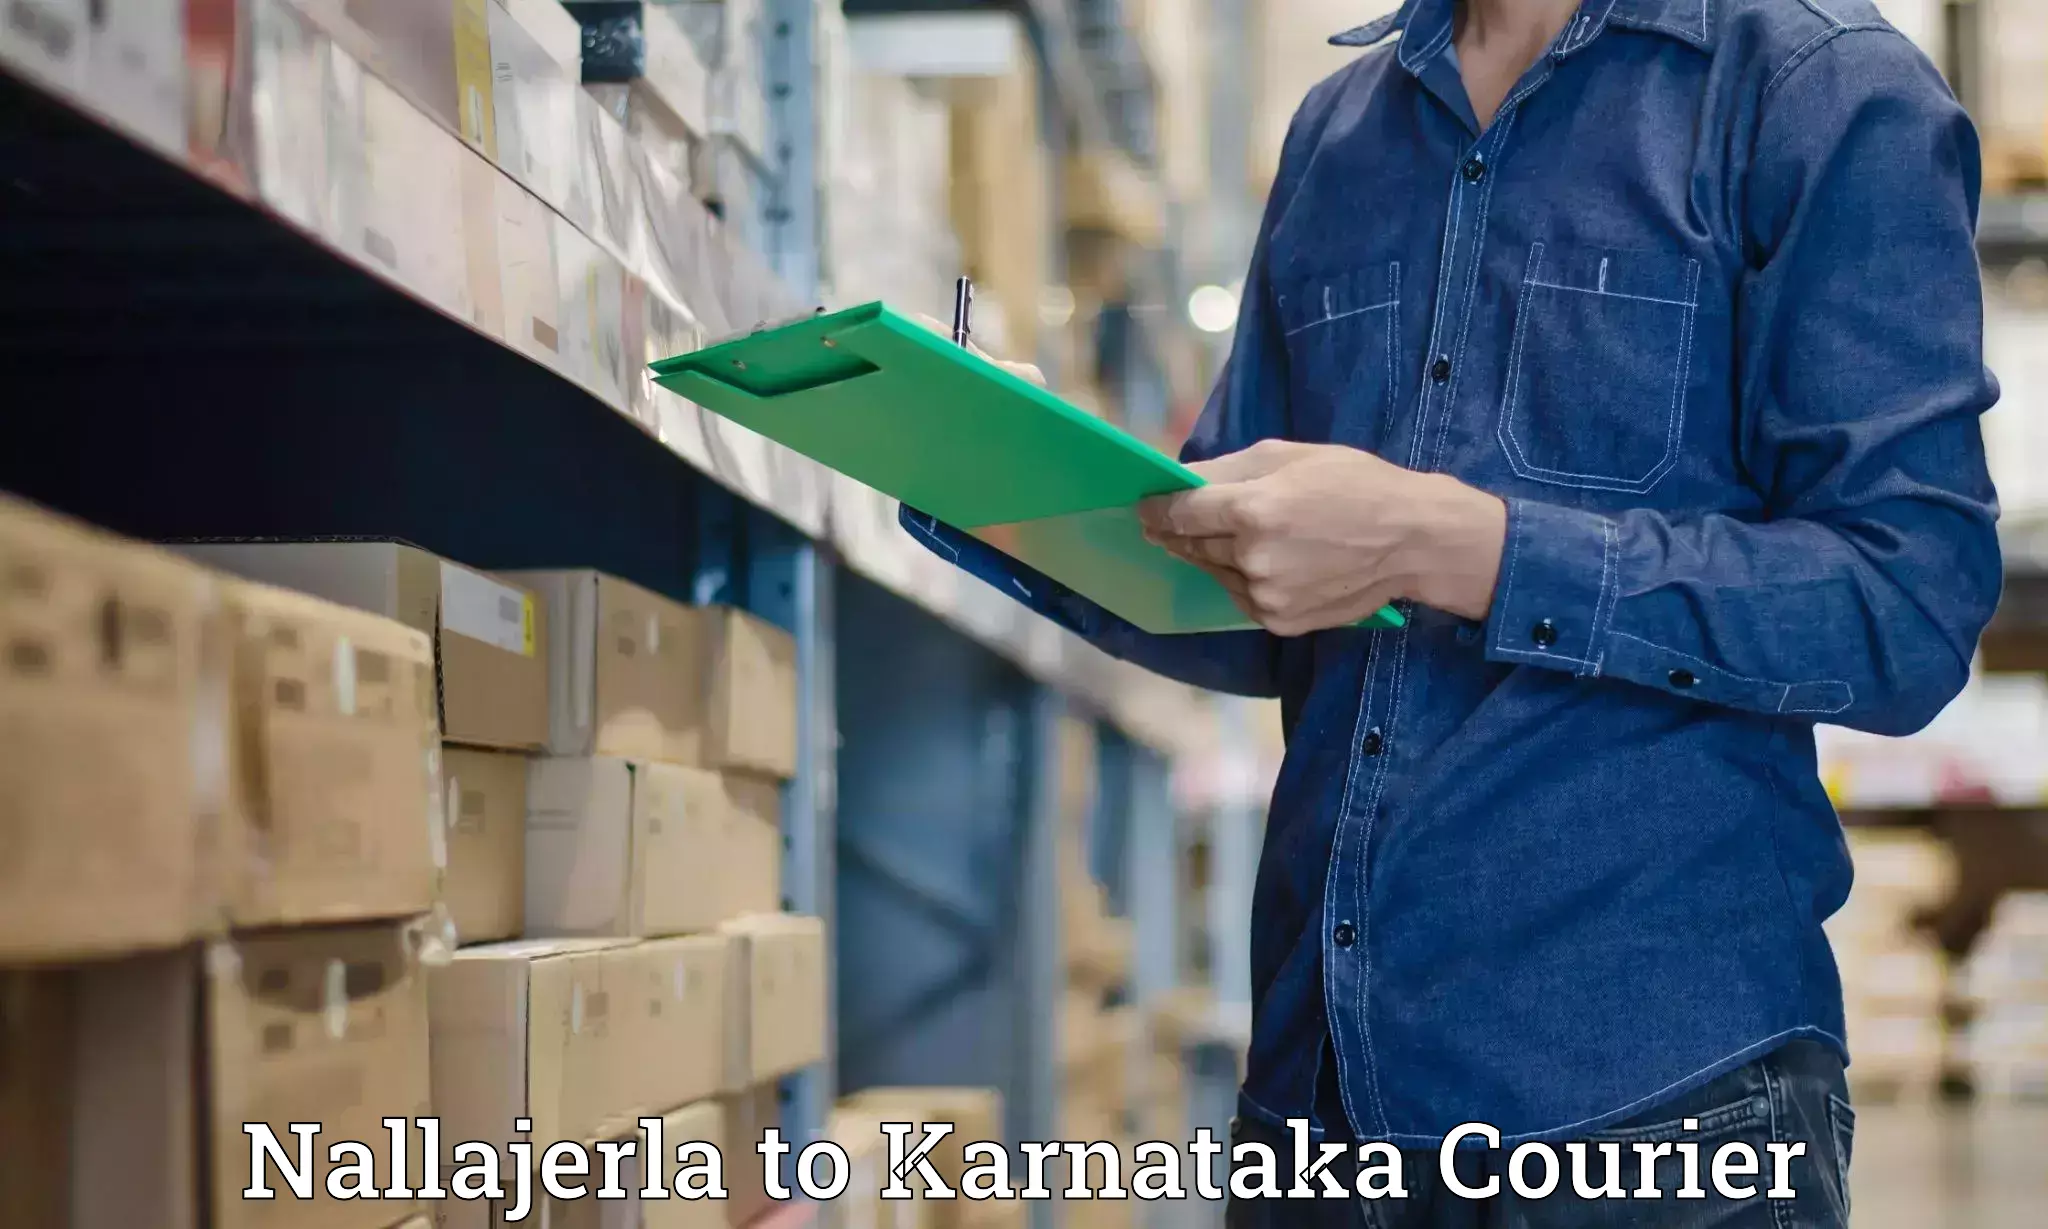 Next-day freight services Nallajerla to Karnataka